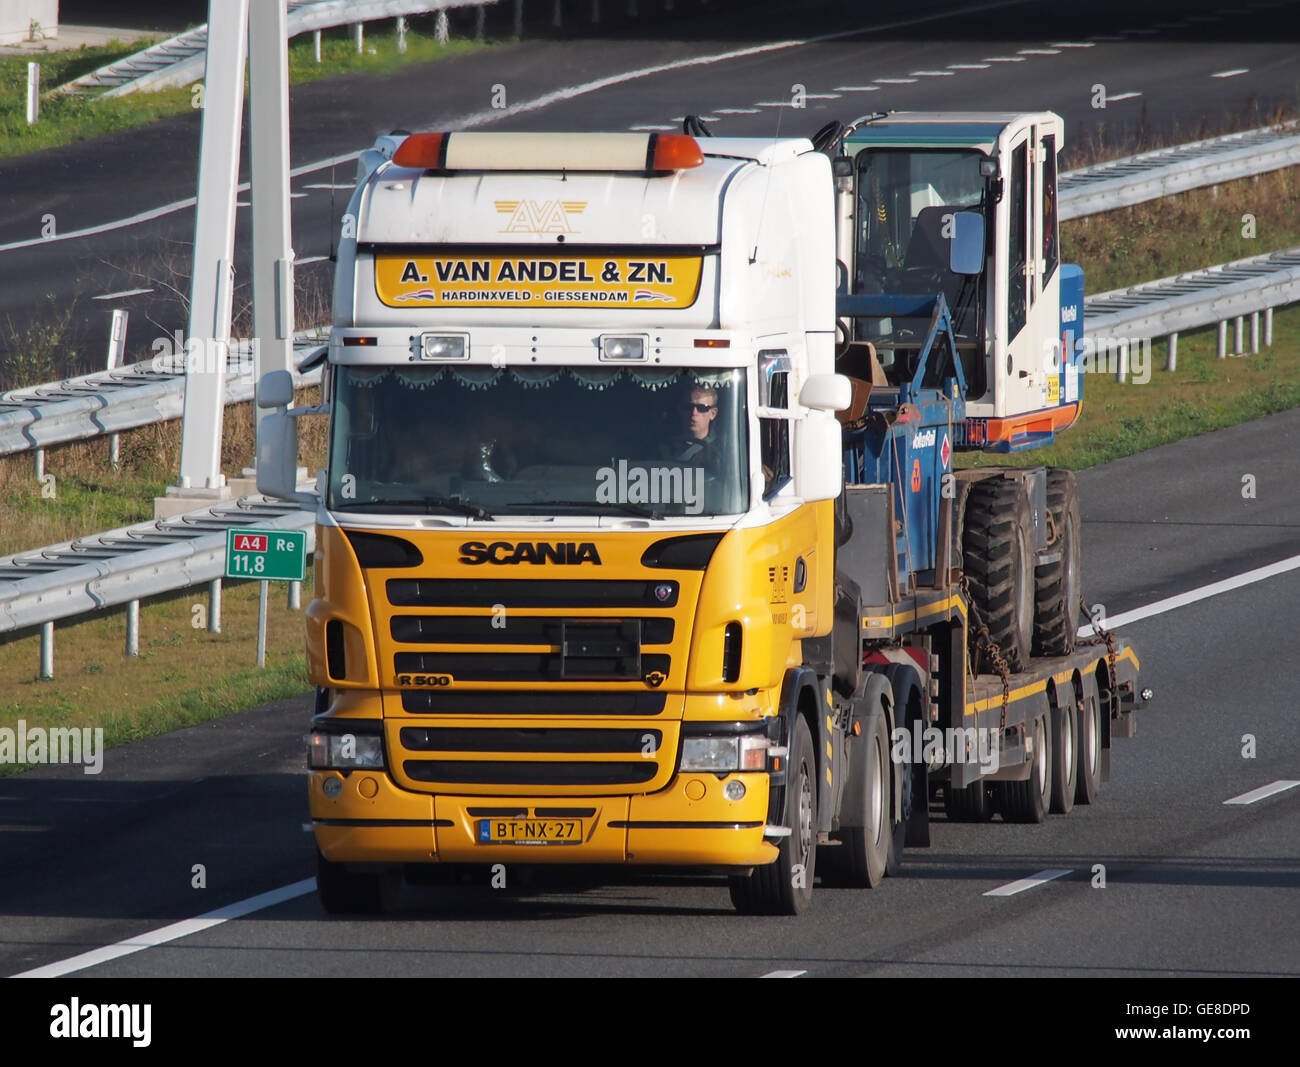 R500 Scania, un van Andel & Zn Foto Stock